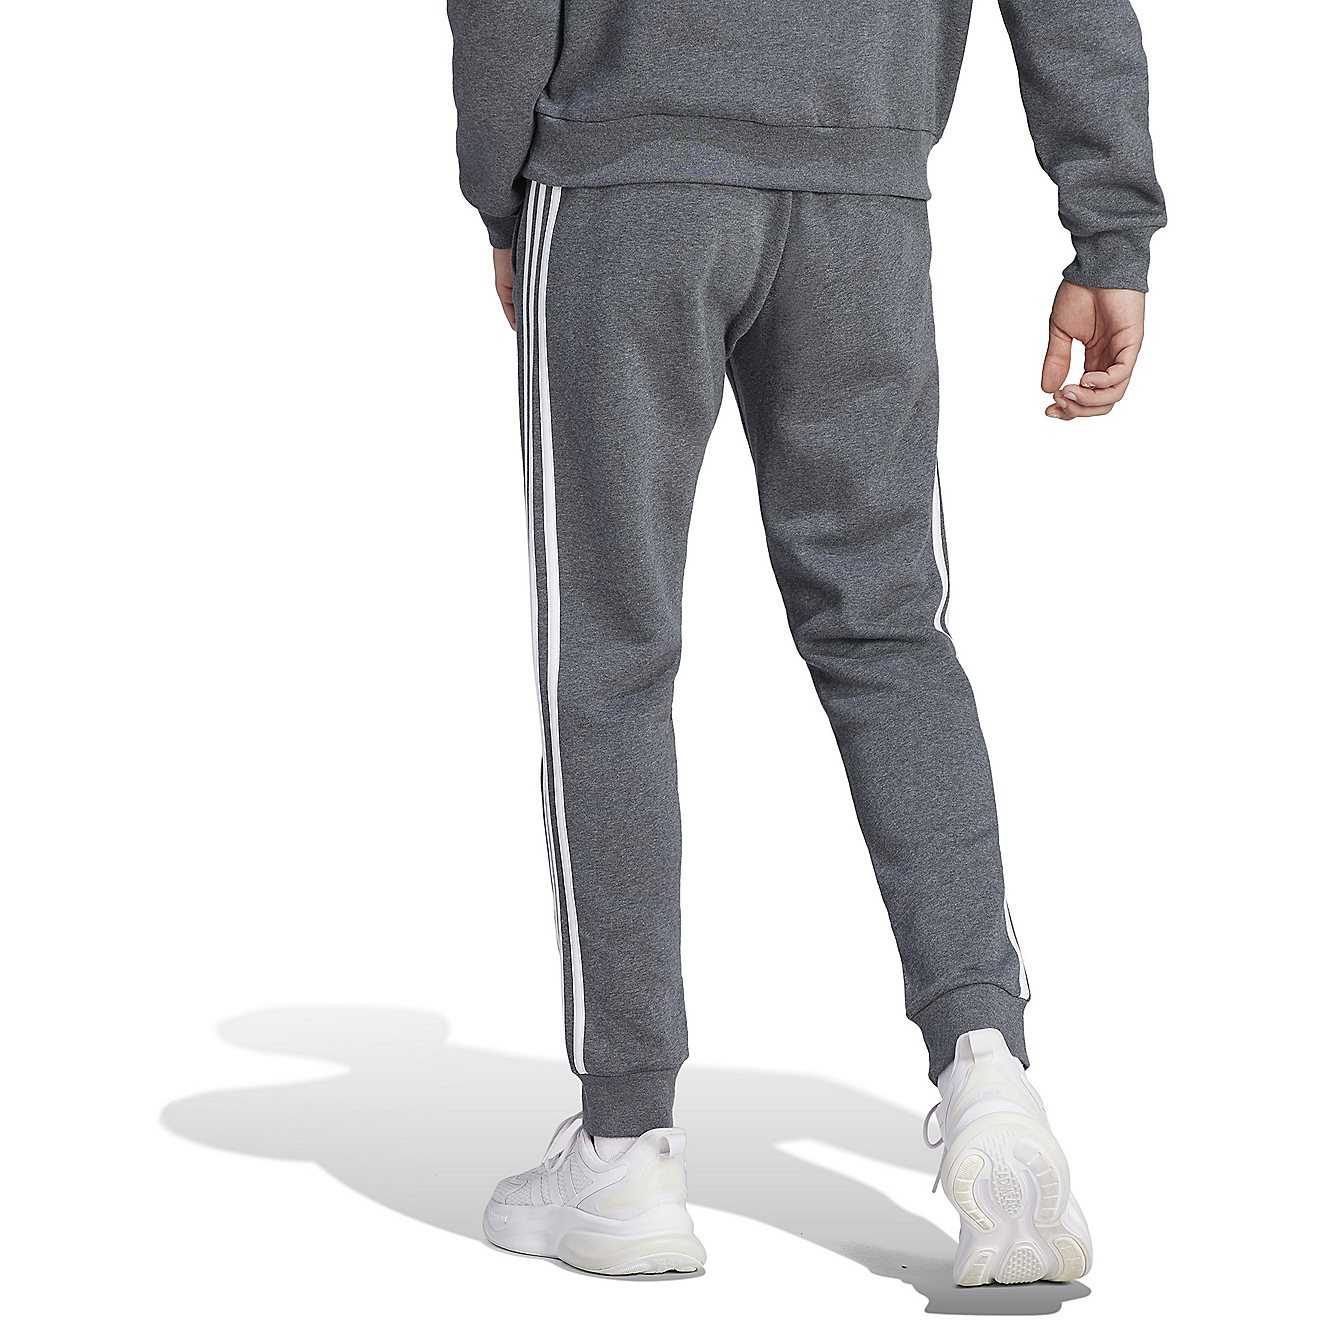 Adidas Men's 3S Fleece TC Pants | Free Shipping at Academy